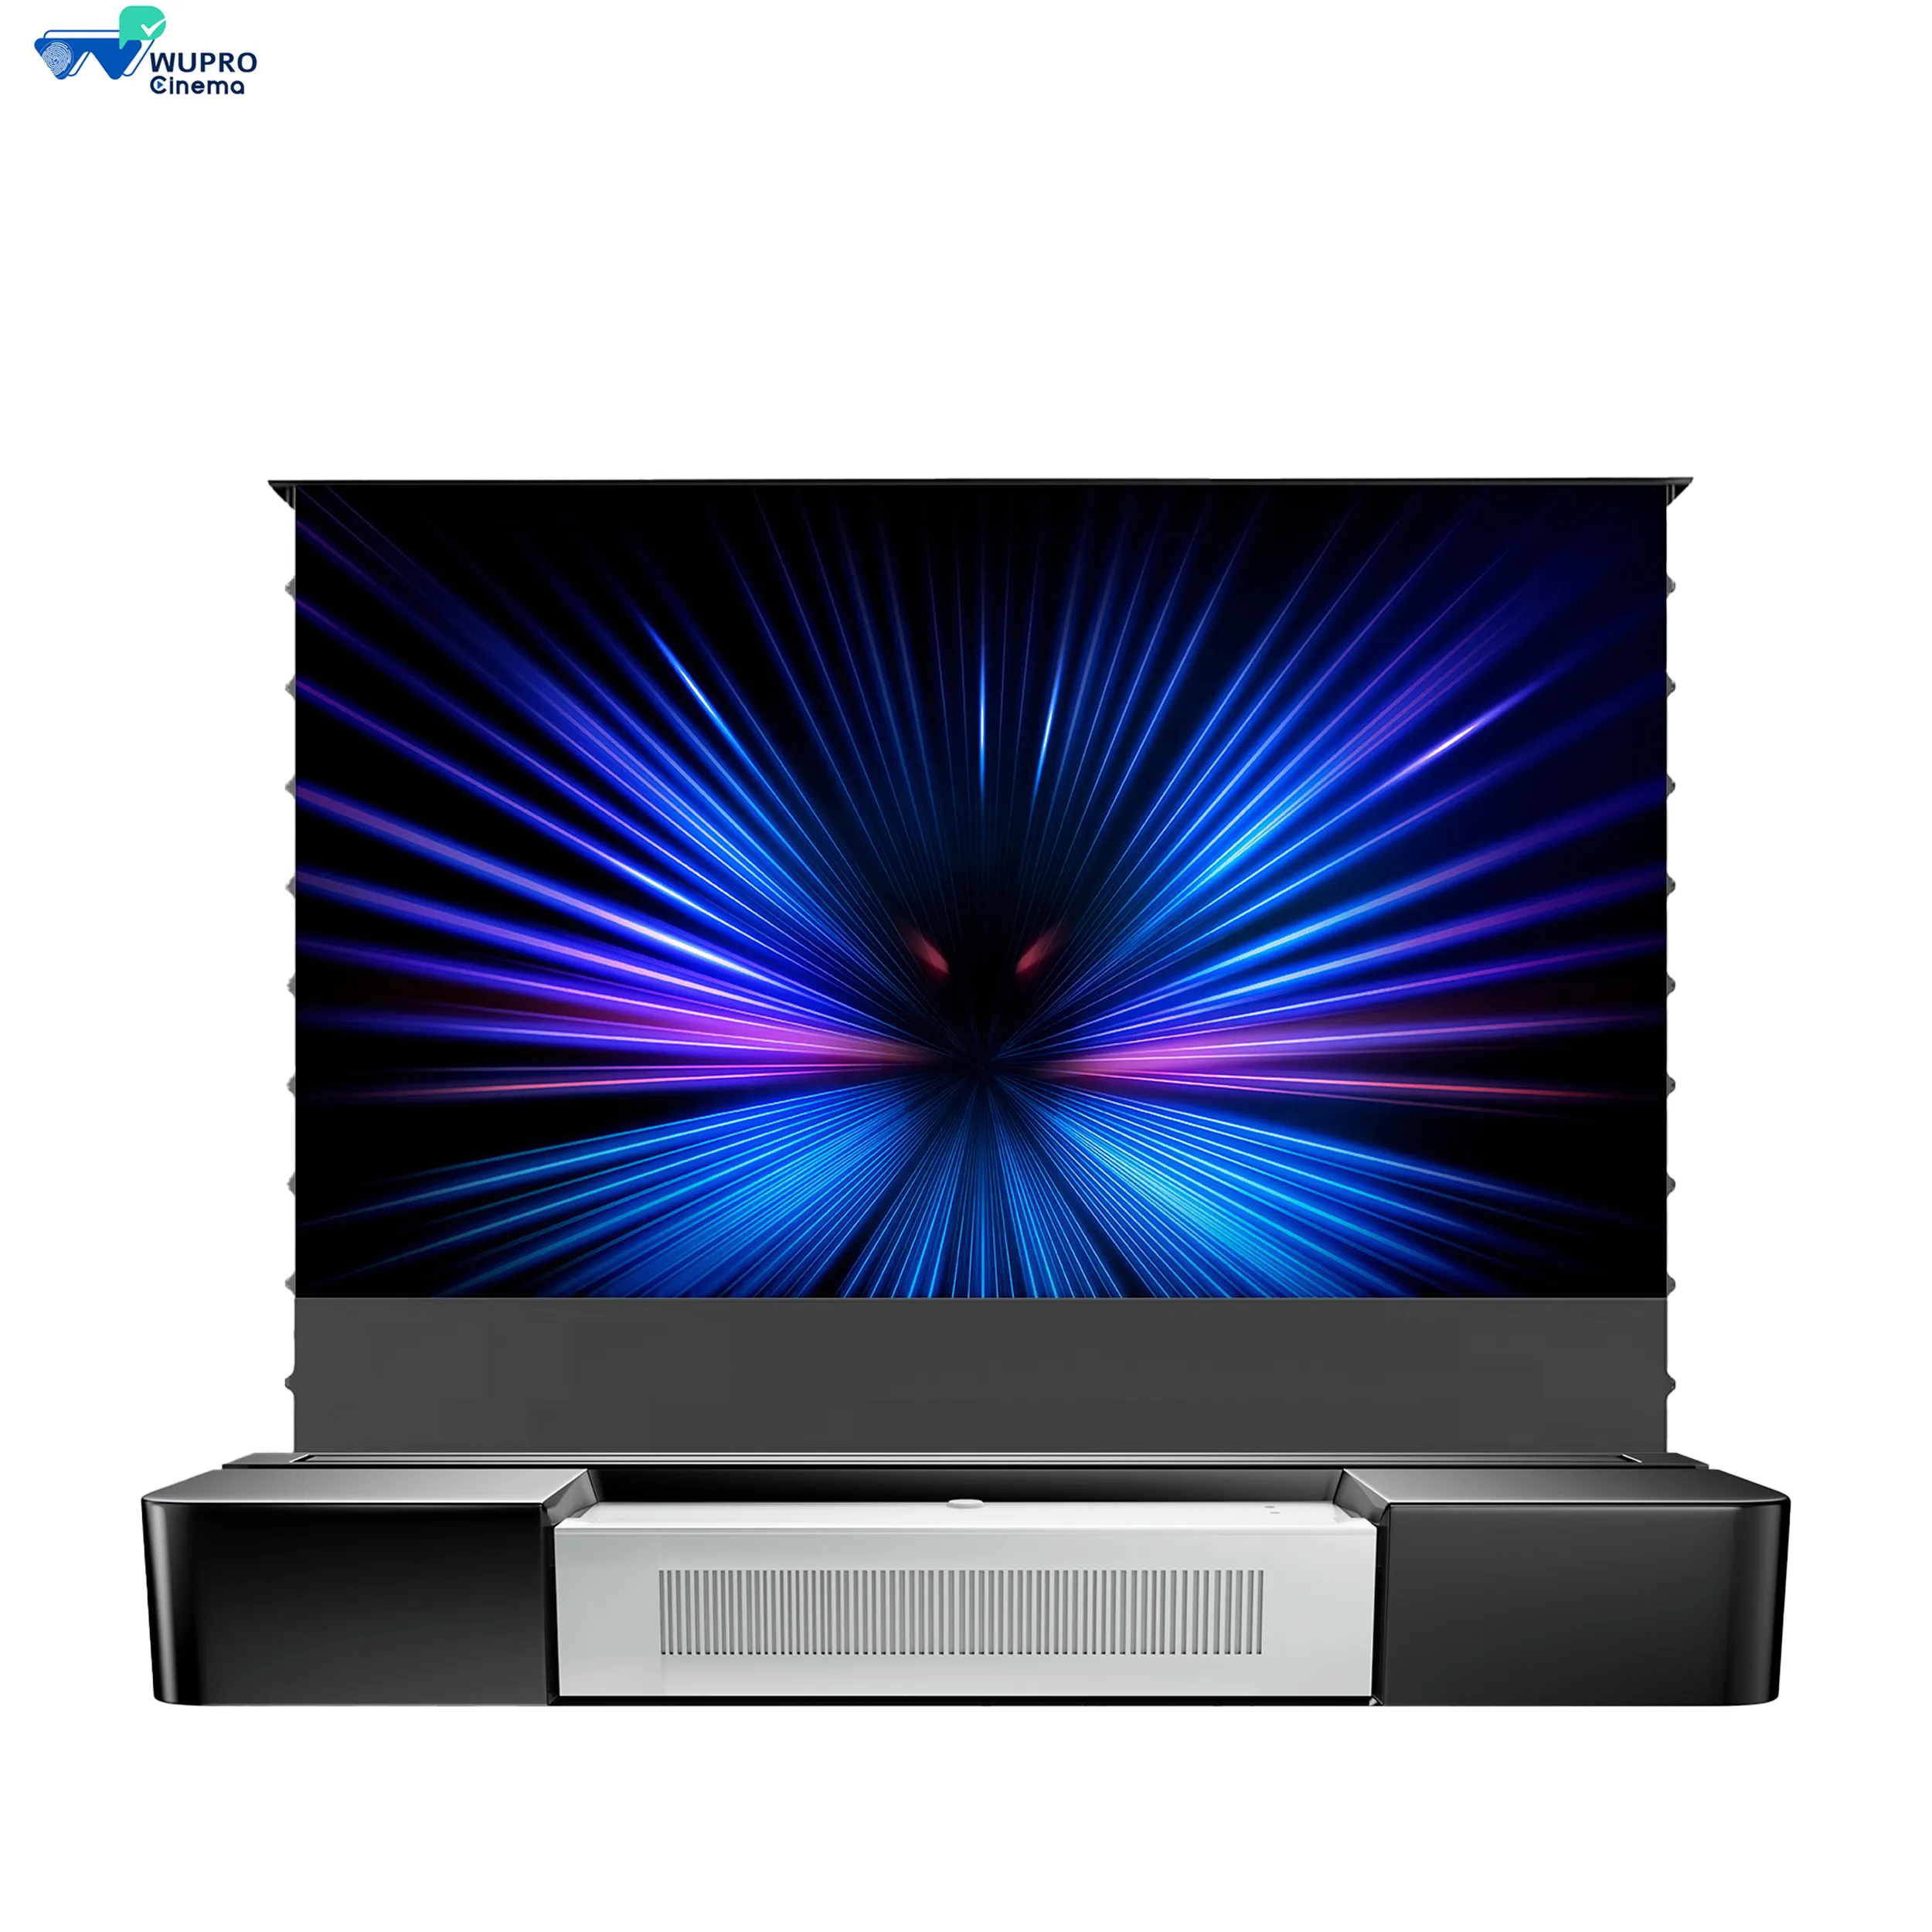 WUPRO OEM tela cbsp tv a laser armário ust projetor 120 alr tela gabinete integrado tv a laser armário inteligente